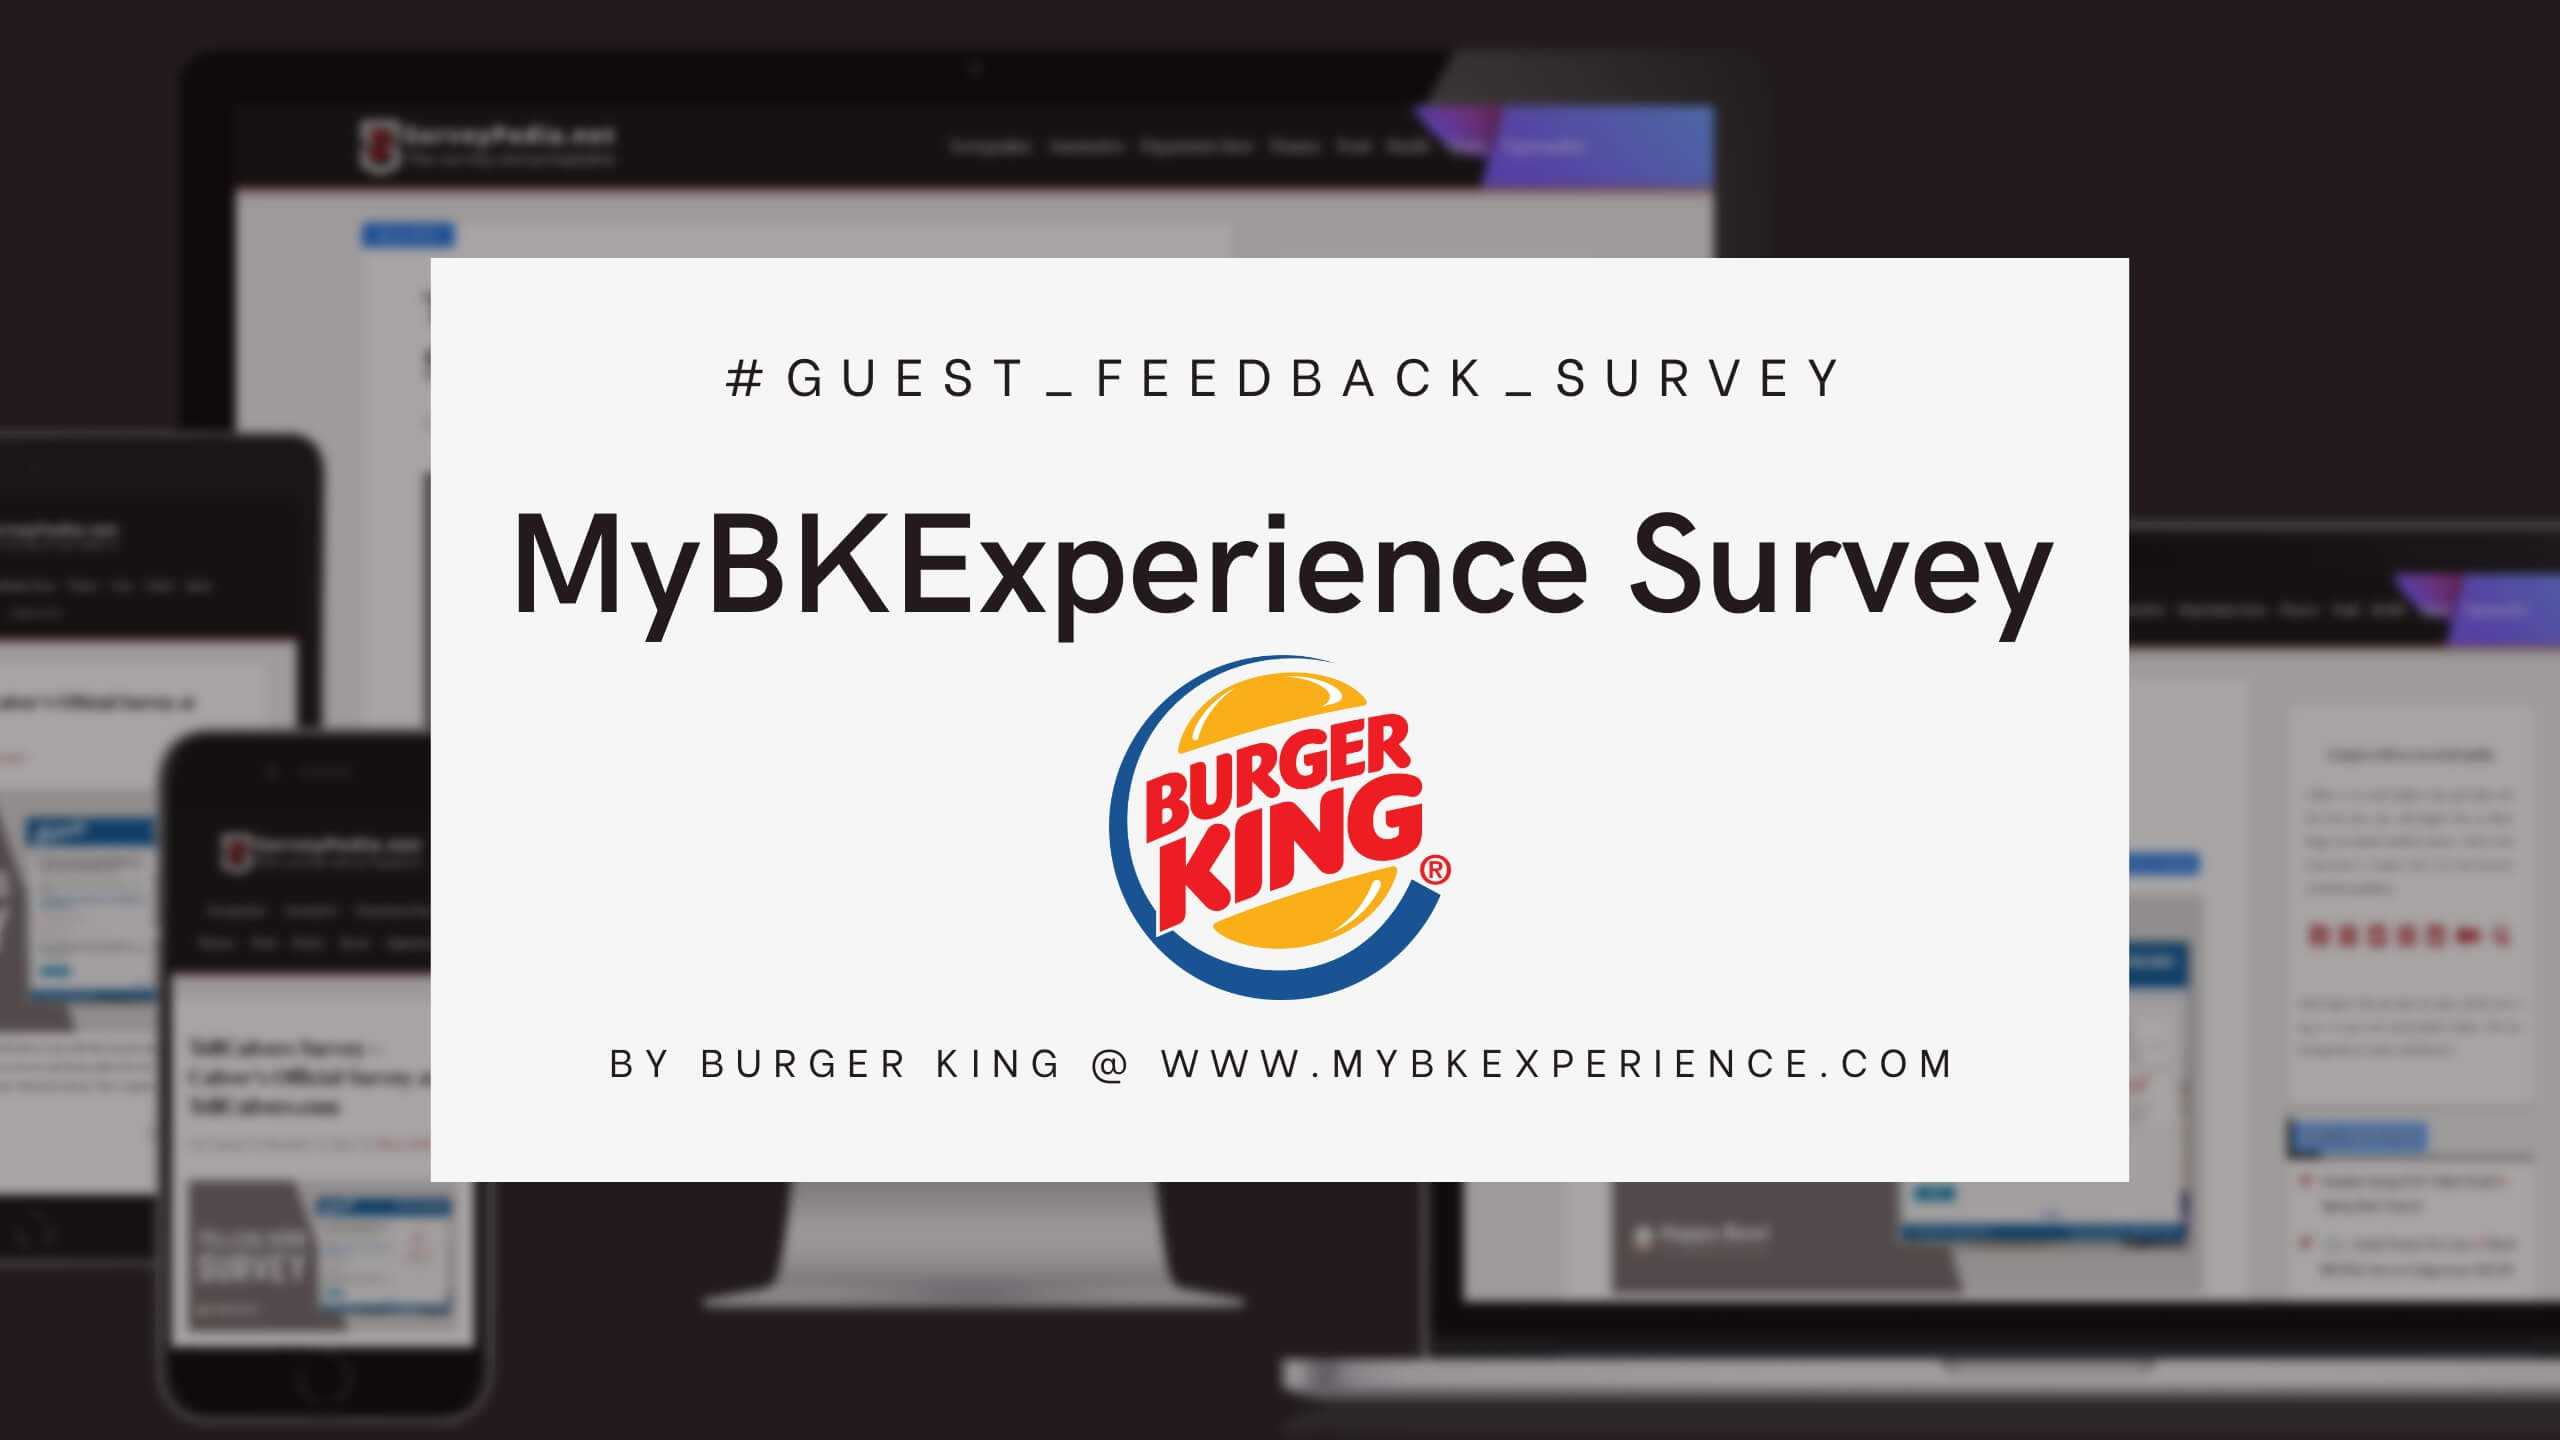 MyBKExperience Survey: Burger King Official Customer Satisfaction Survey at MyBKExperience.com